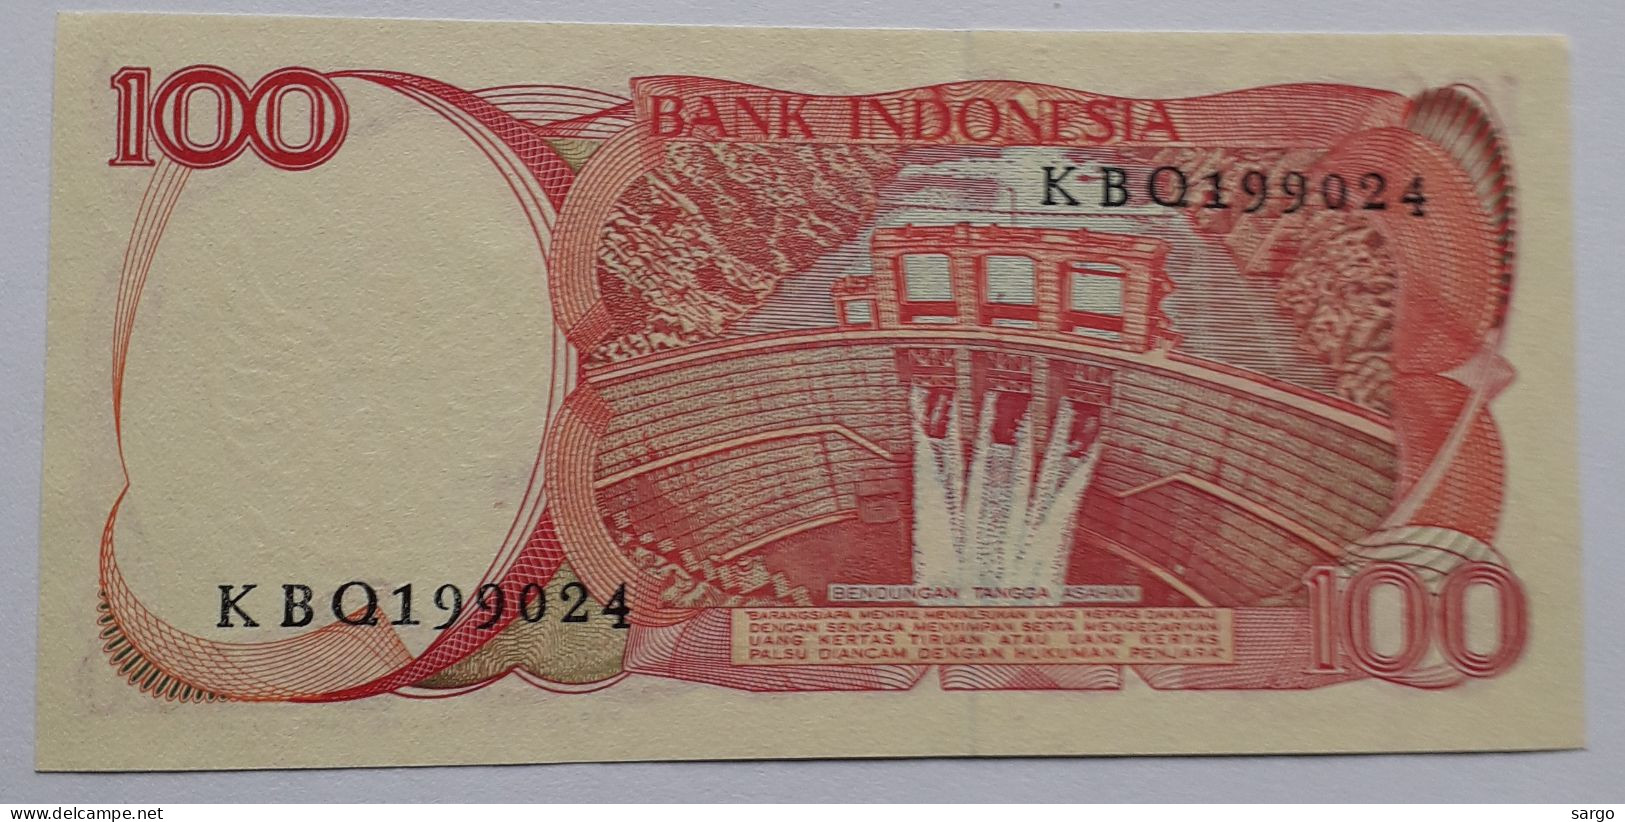 INDONEASIA - 100 RUPIAH - P 122 (1984) - UNCIRC - BANKNOTES - PAPER MONEY - CARTAMONETA - - Indonesia